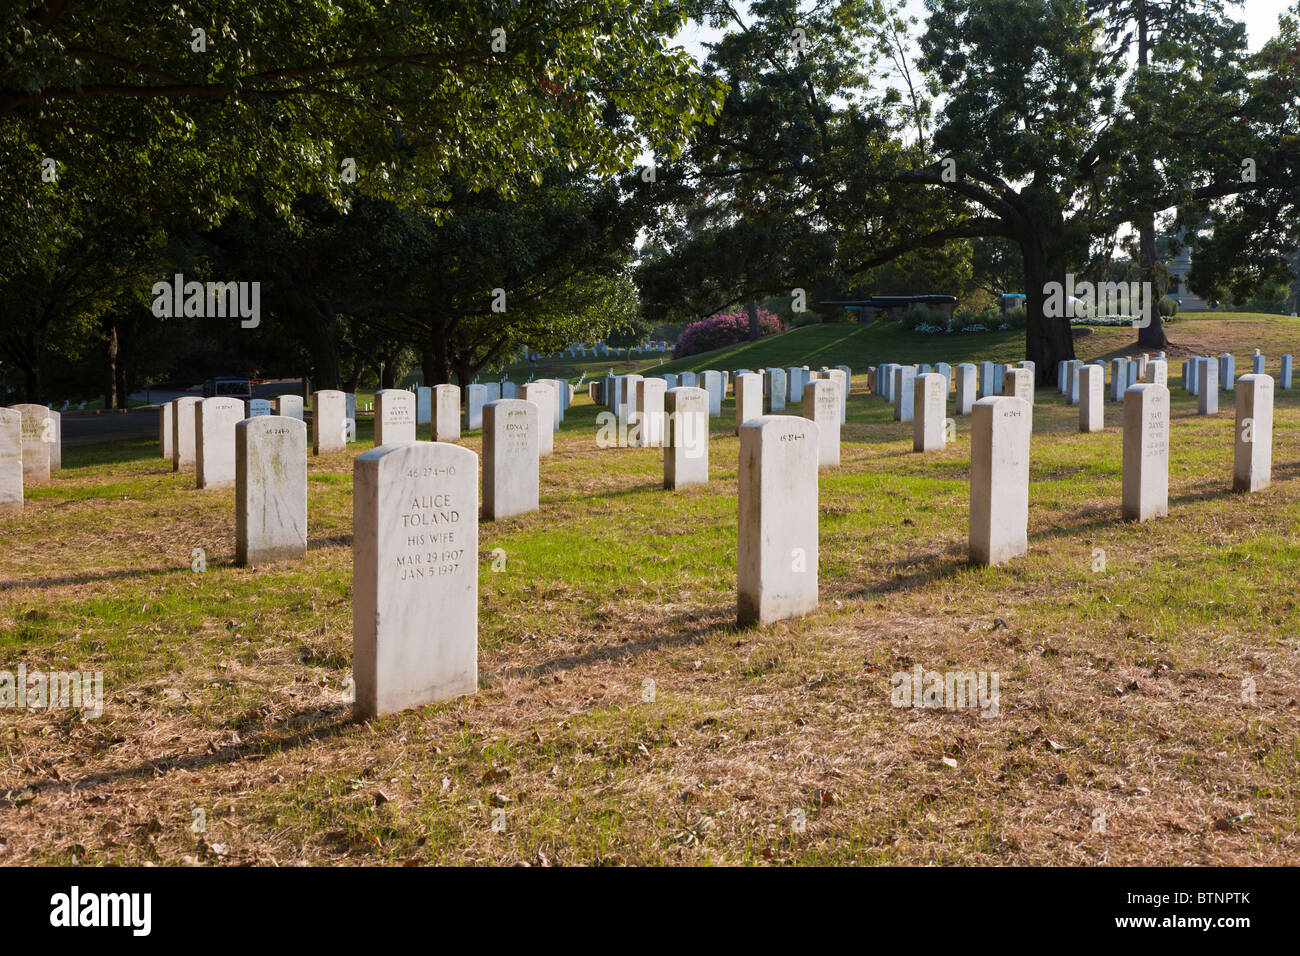 Arlington, VA - Sep 2009 - Rows of headstones in Arlington National Cemetery in Arlington, Virginia Stock Photo